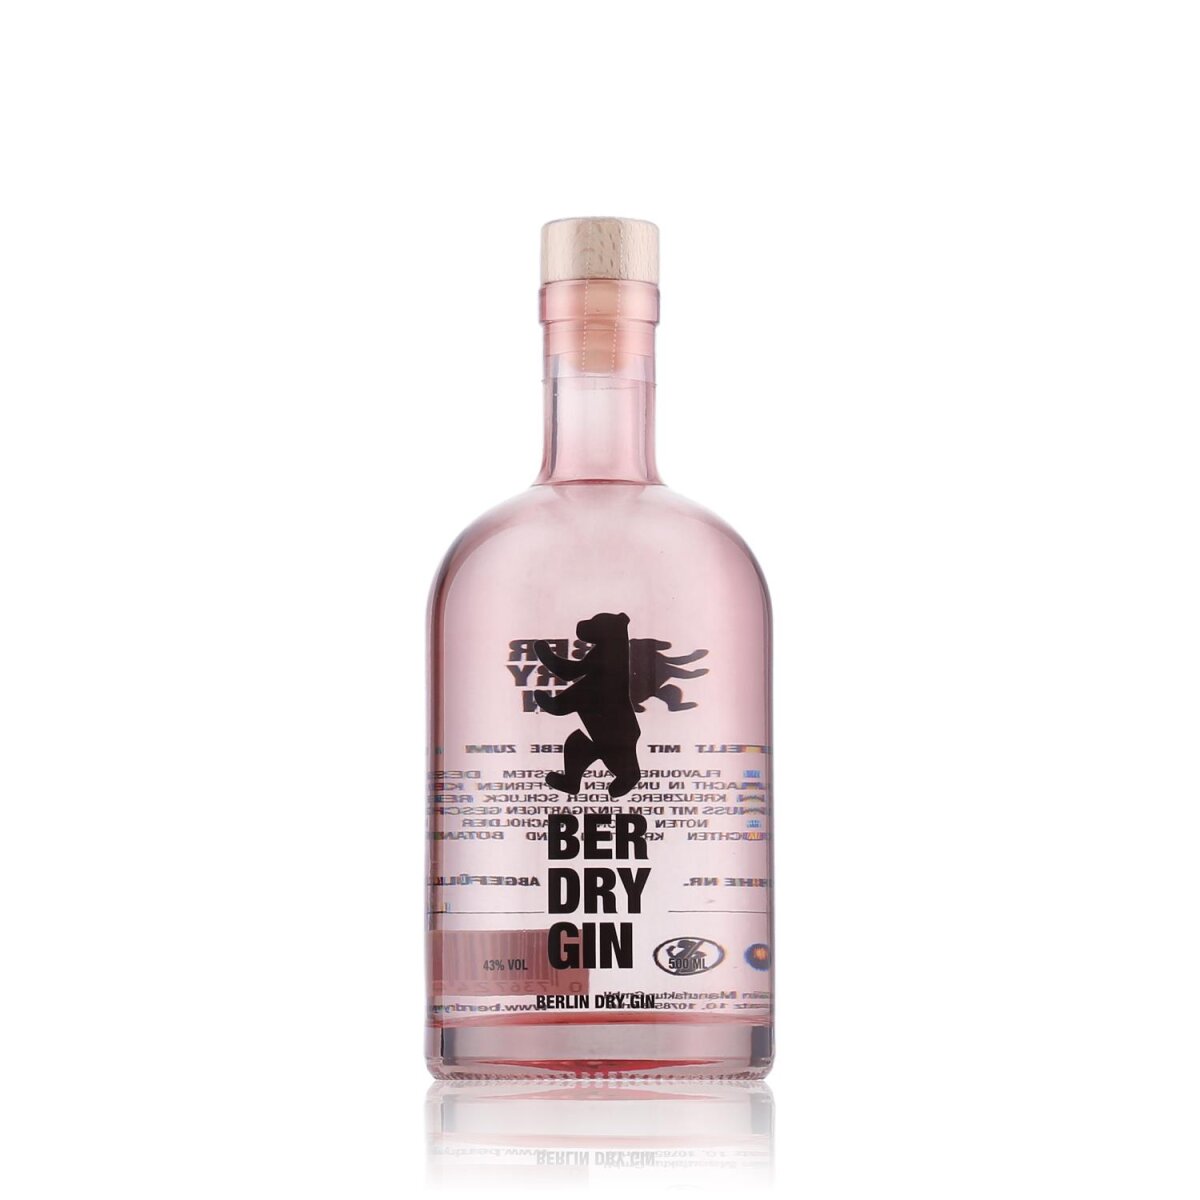 BER Dry Gin 0,5l, 22,99 €